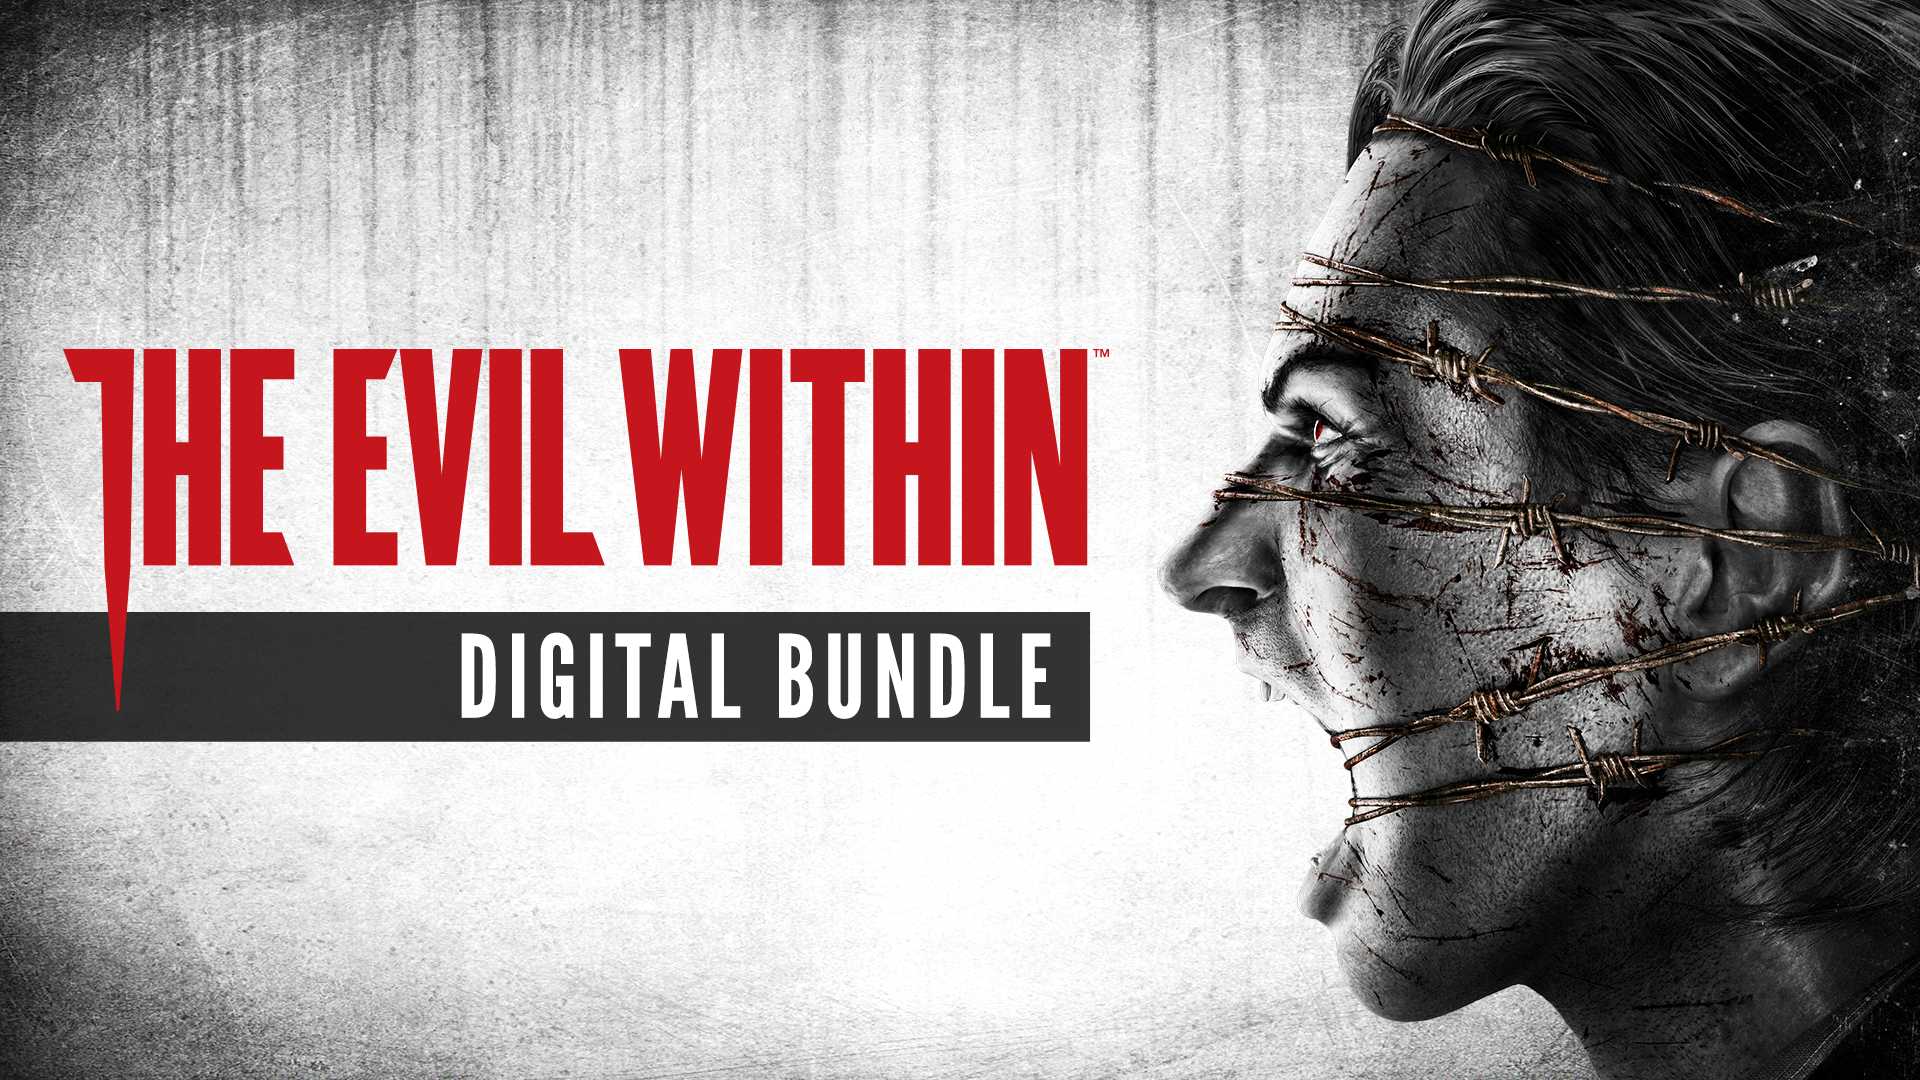 The Evil Within Digital Bundle